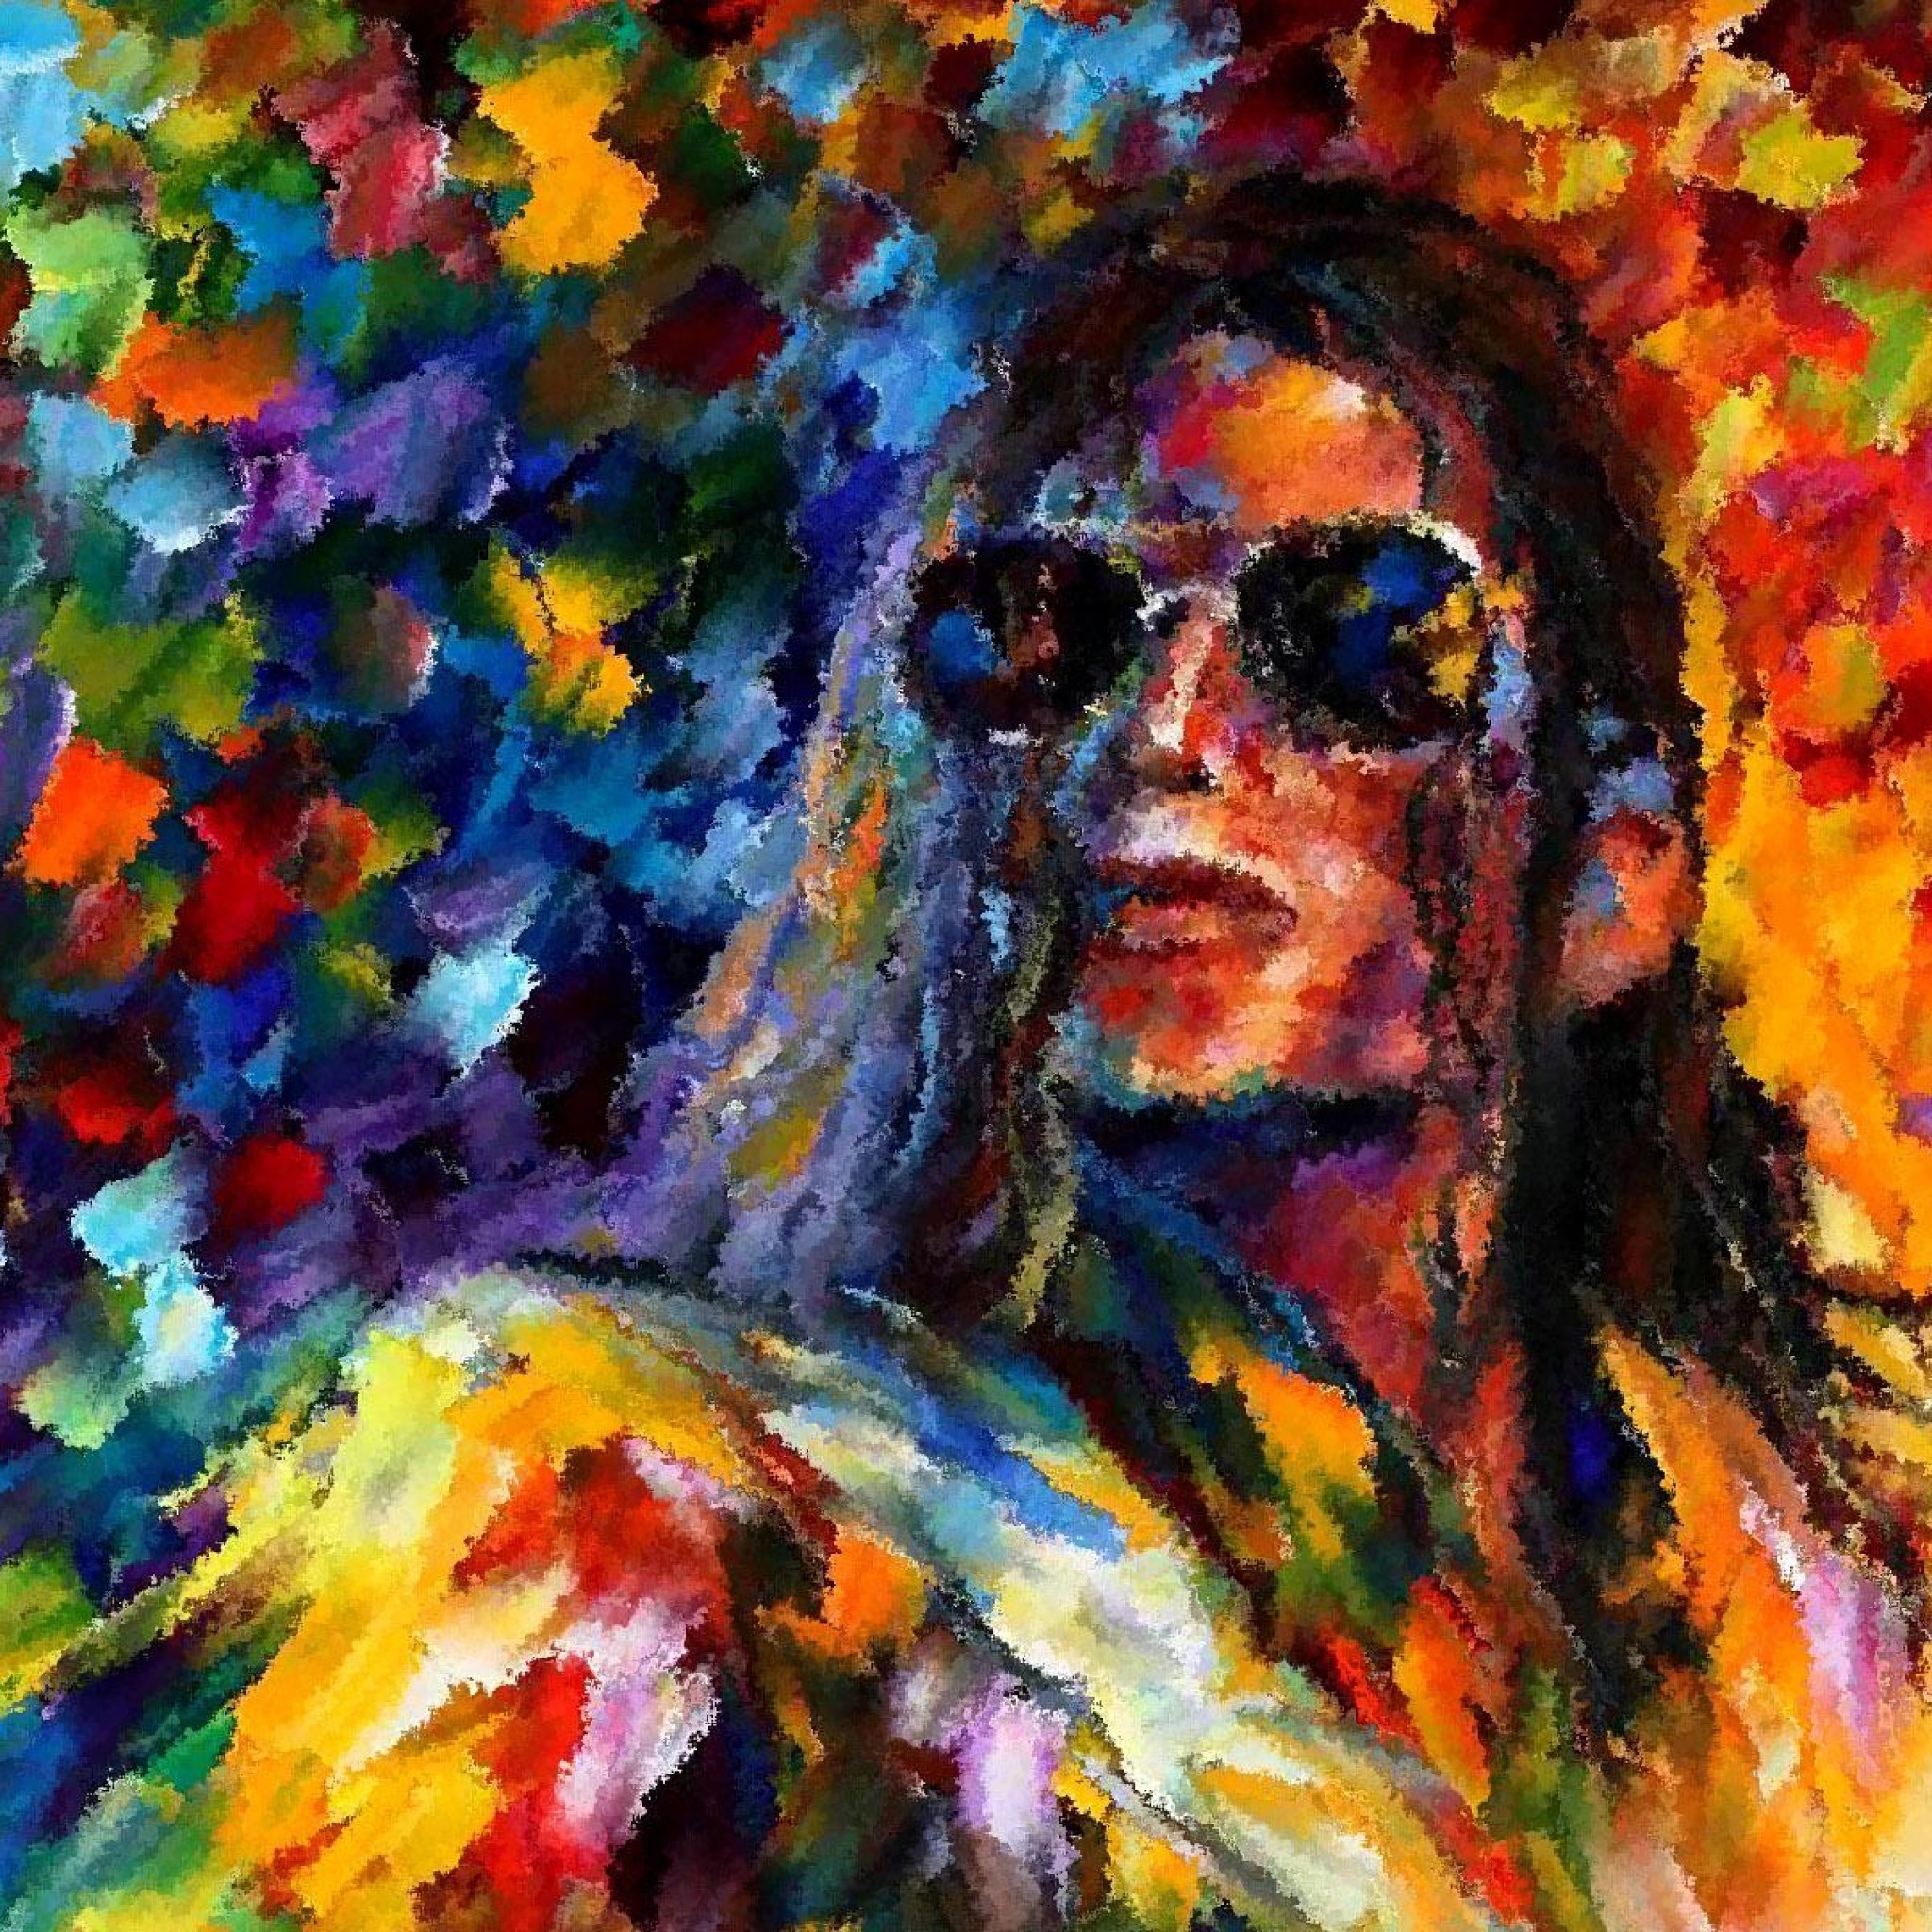 Michael Jackson Painting Wallpaper Wallpapers Kingdom Ipad タブレット壁紙ギャラリー